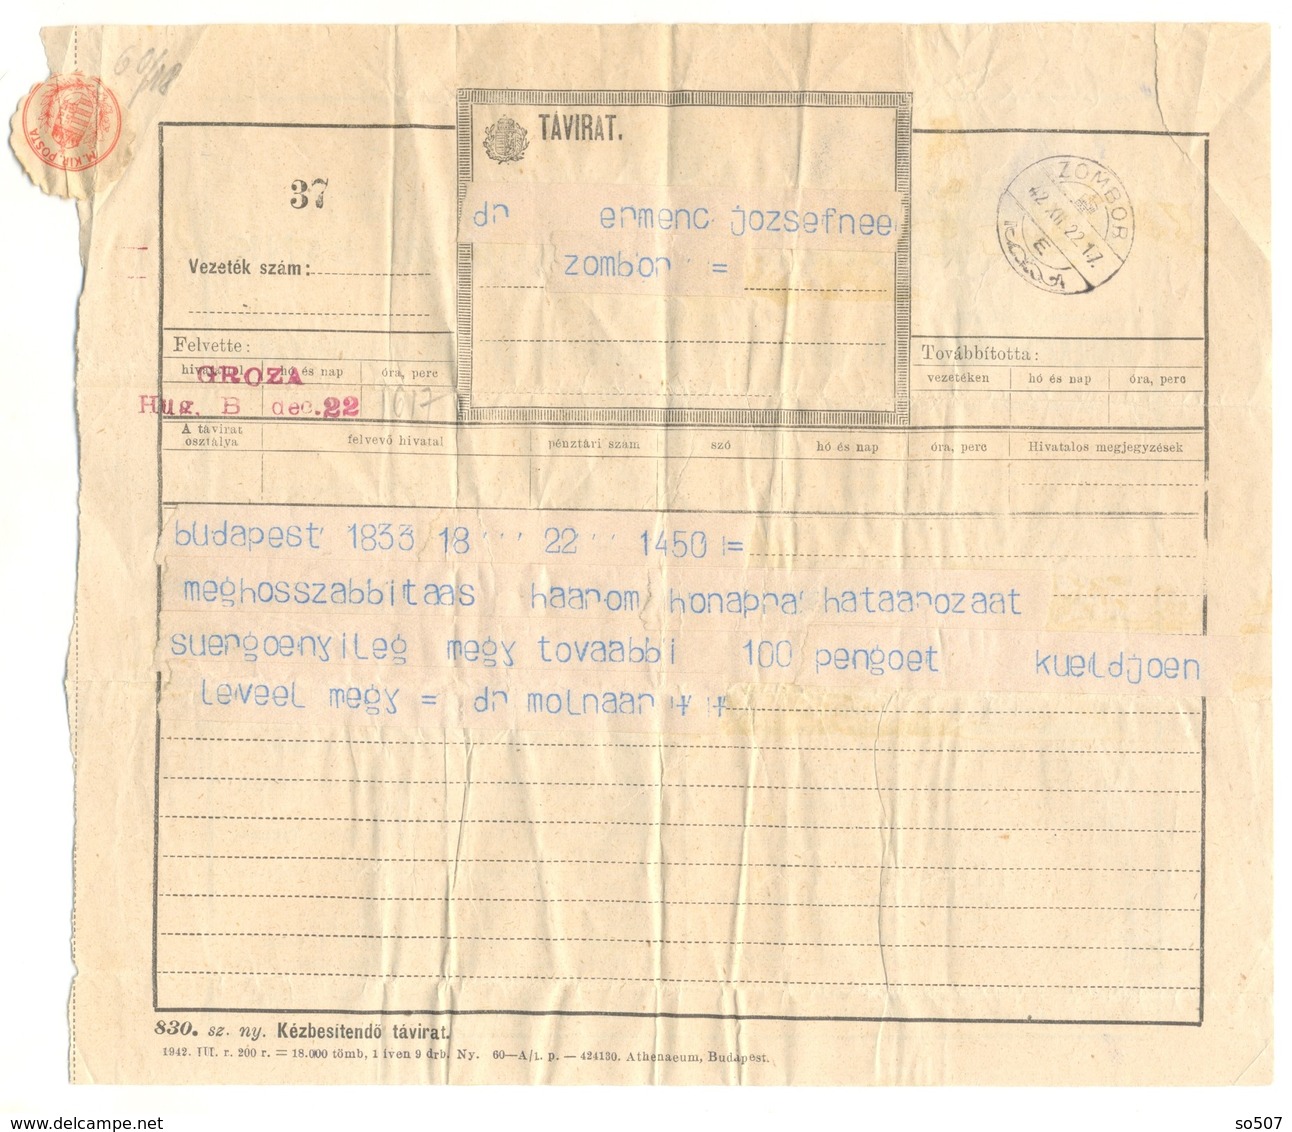 T1-Tavirat Telegram Telegraph Traveled From Dr. Molnar Hungary Budapest To Zombor Sombor Yugoslavia 1942. - Telegraaf